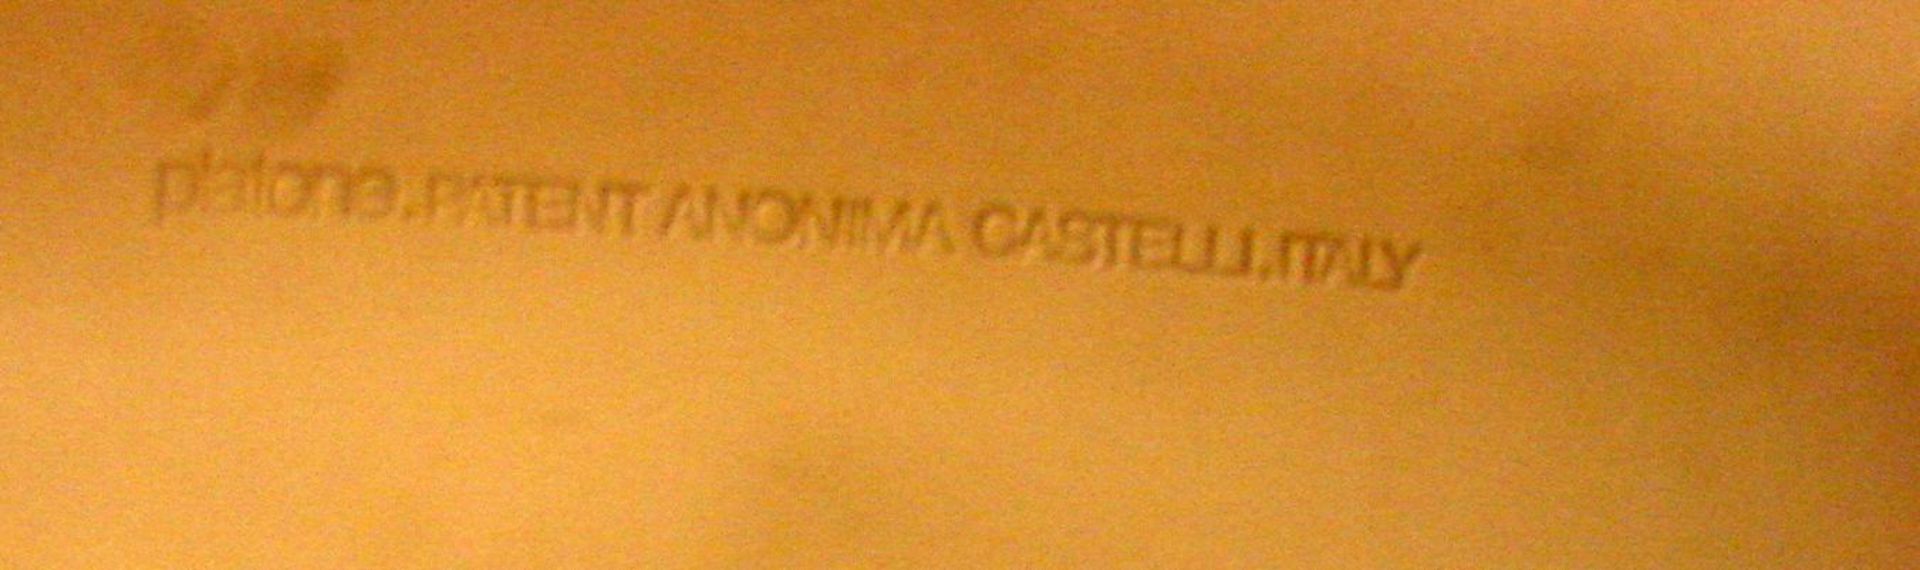 Klapptisch, Chromgestell, Platone Patent Anonima Castelli, Bologna, Italy, - Image 2 of 2